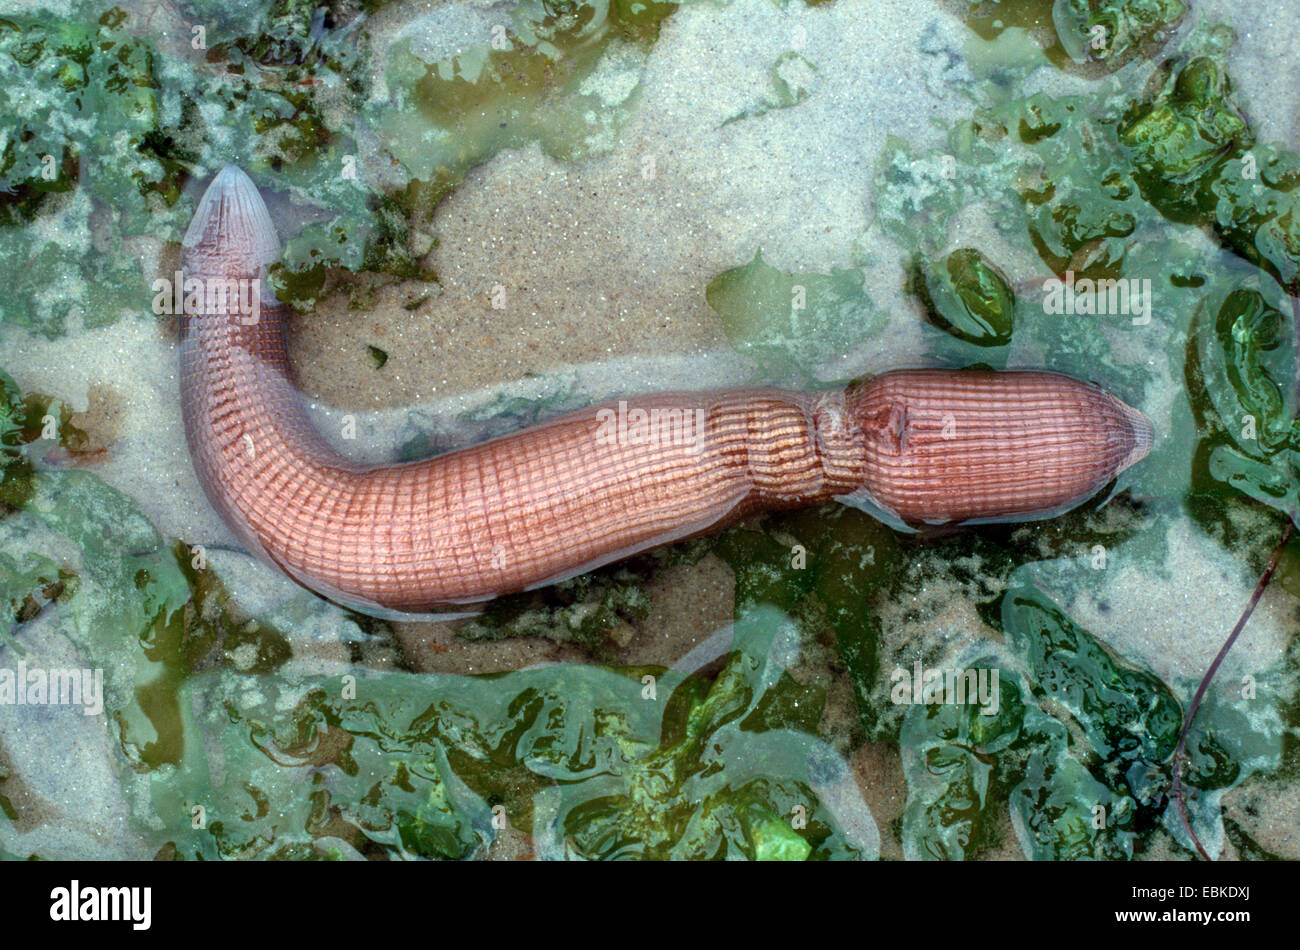 Marine worm, Peanut worm (Sipunculus nudus), lying in shallow water on the sand between seaweed Stock Photo